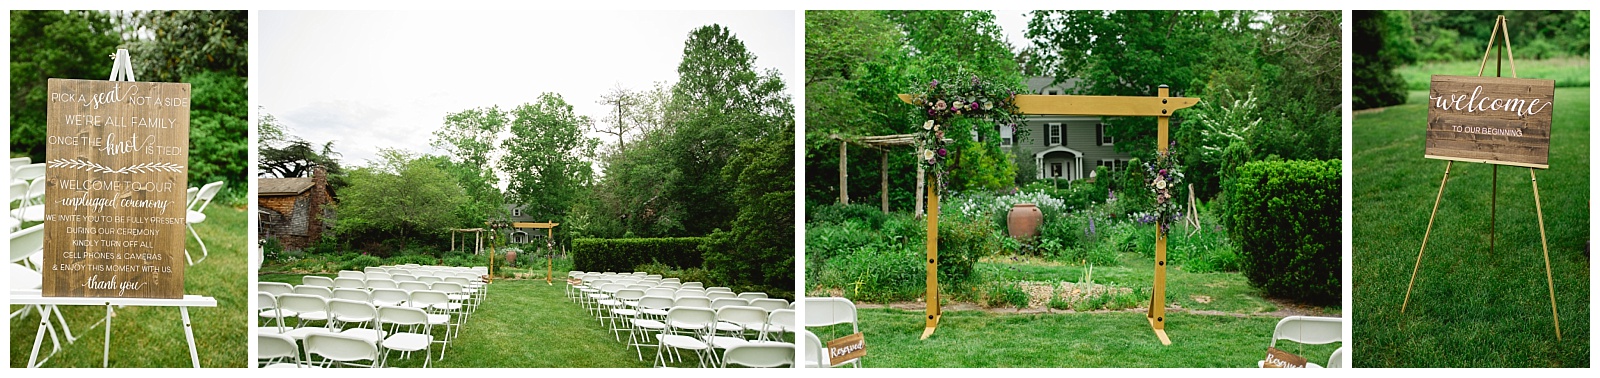 willowwood arboretum wedding willowwood arboretum garden wedding outdoor wedding tent wedding outdoor ceremony may wedding willowwood